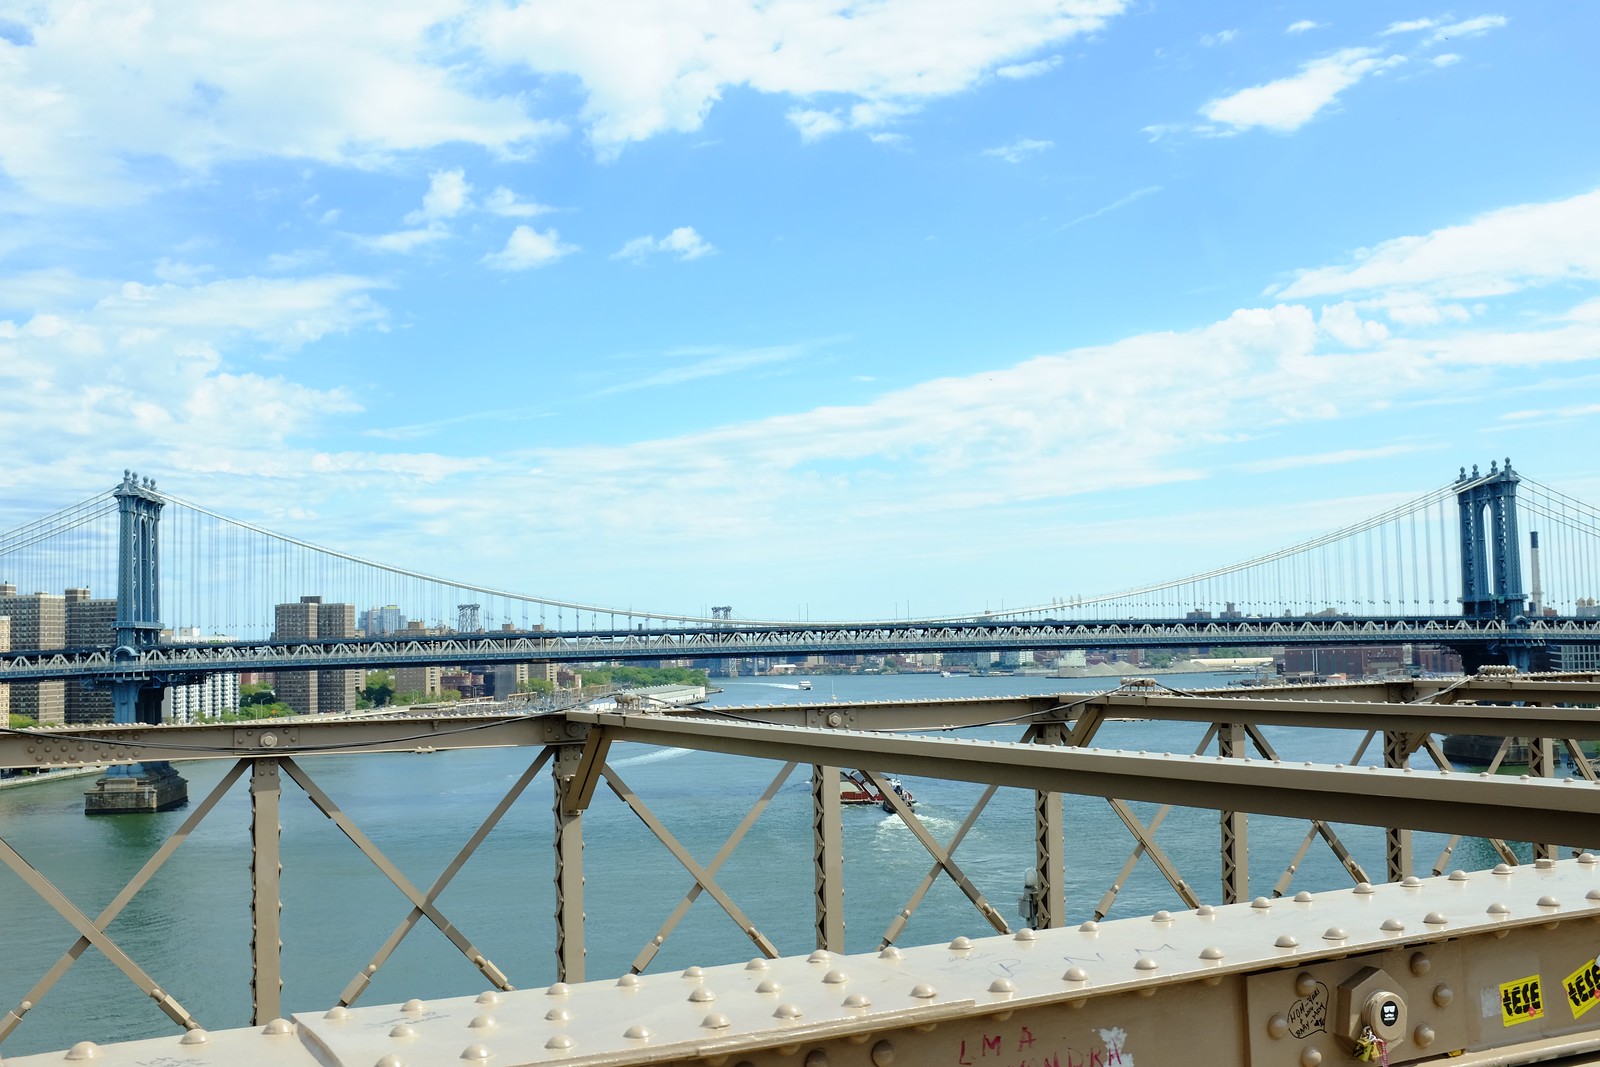 The Brooklyn Bridge by FUJIFILM X100S.